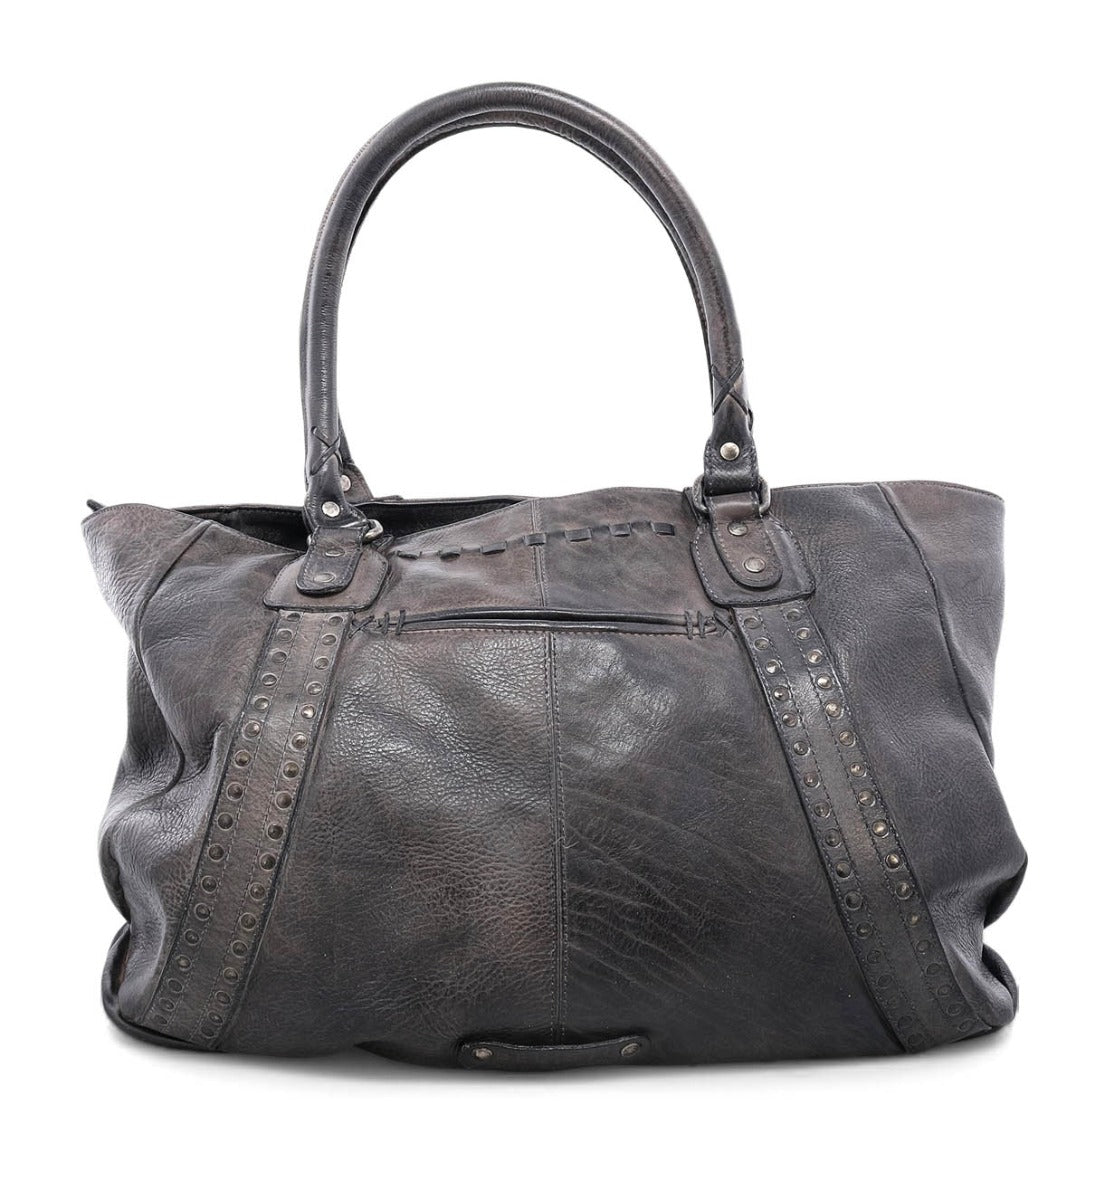 A Bed Stu Geraldin black leather tote bag with rivets.